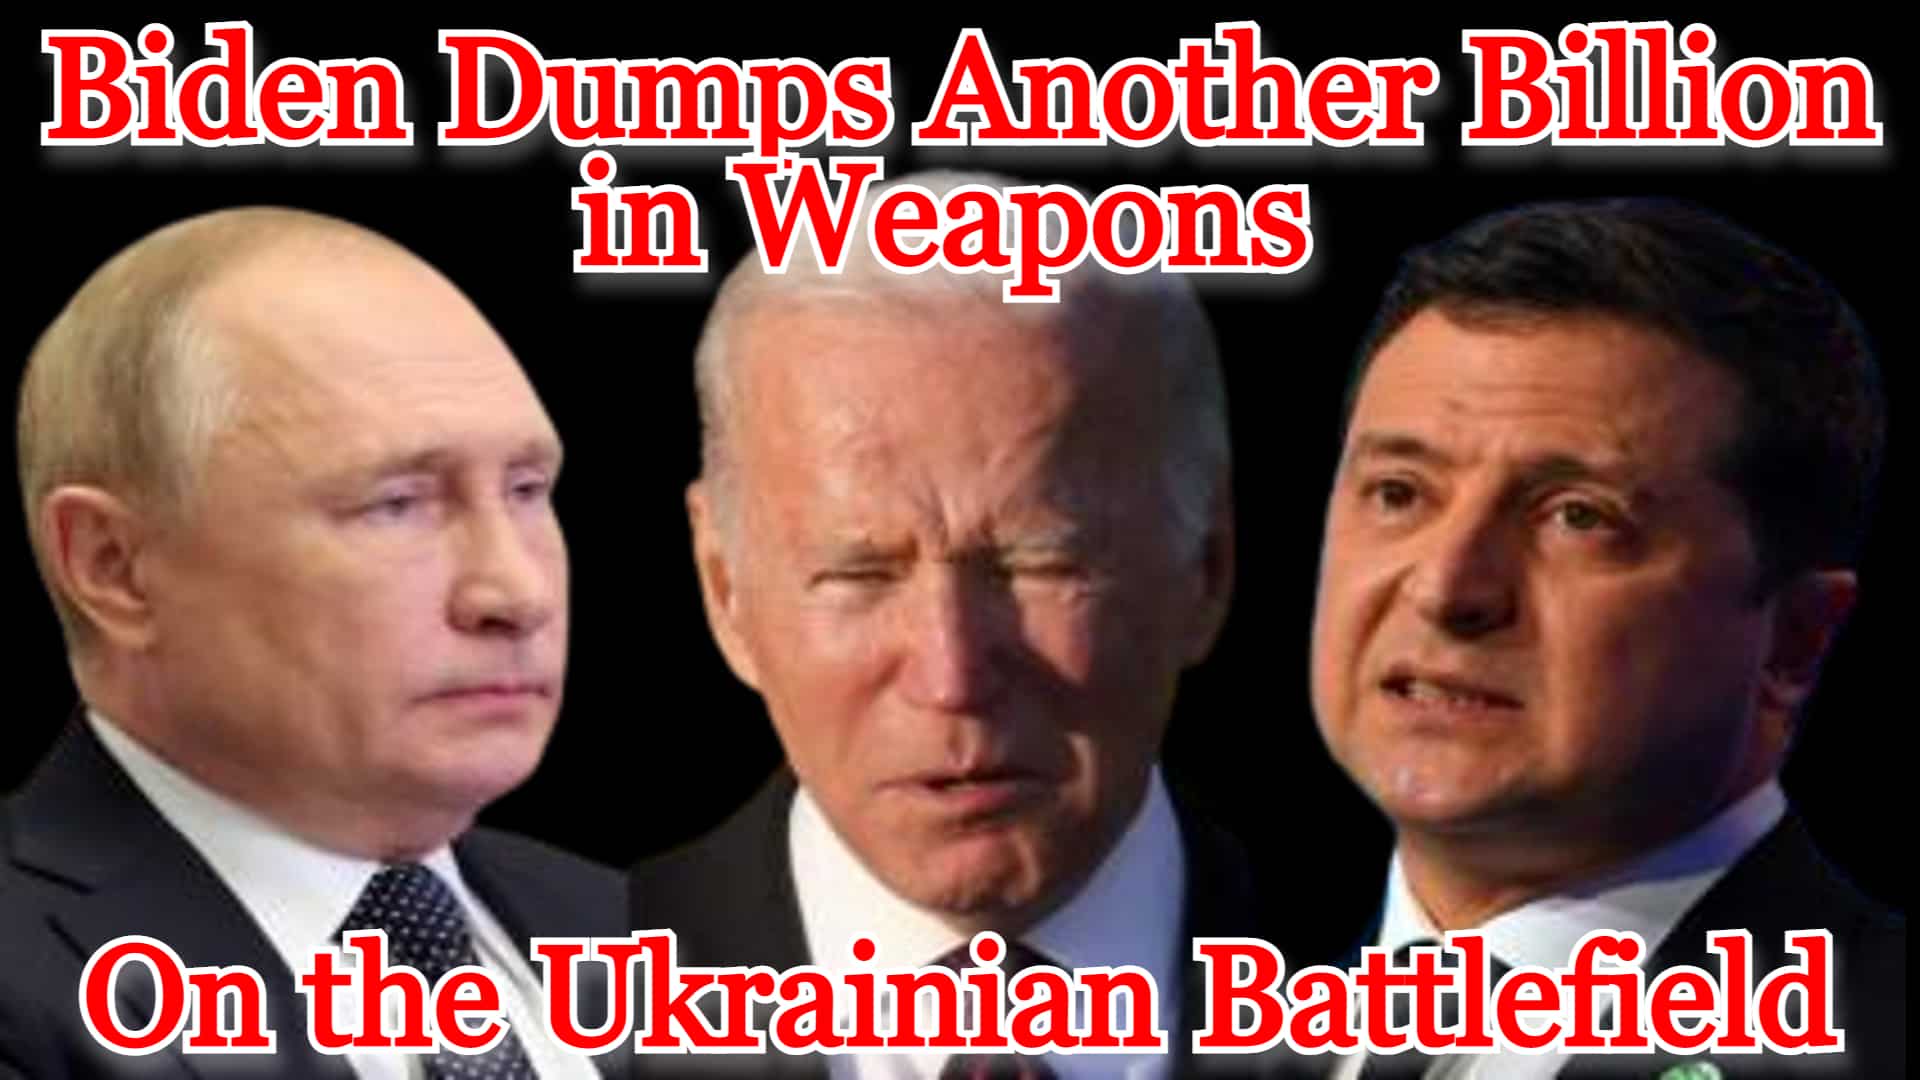 COI #290: Biden Dumps Another Billion in Weapons on the Ukrainian Battlefield